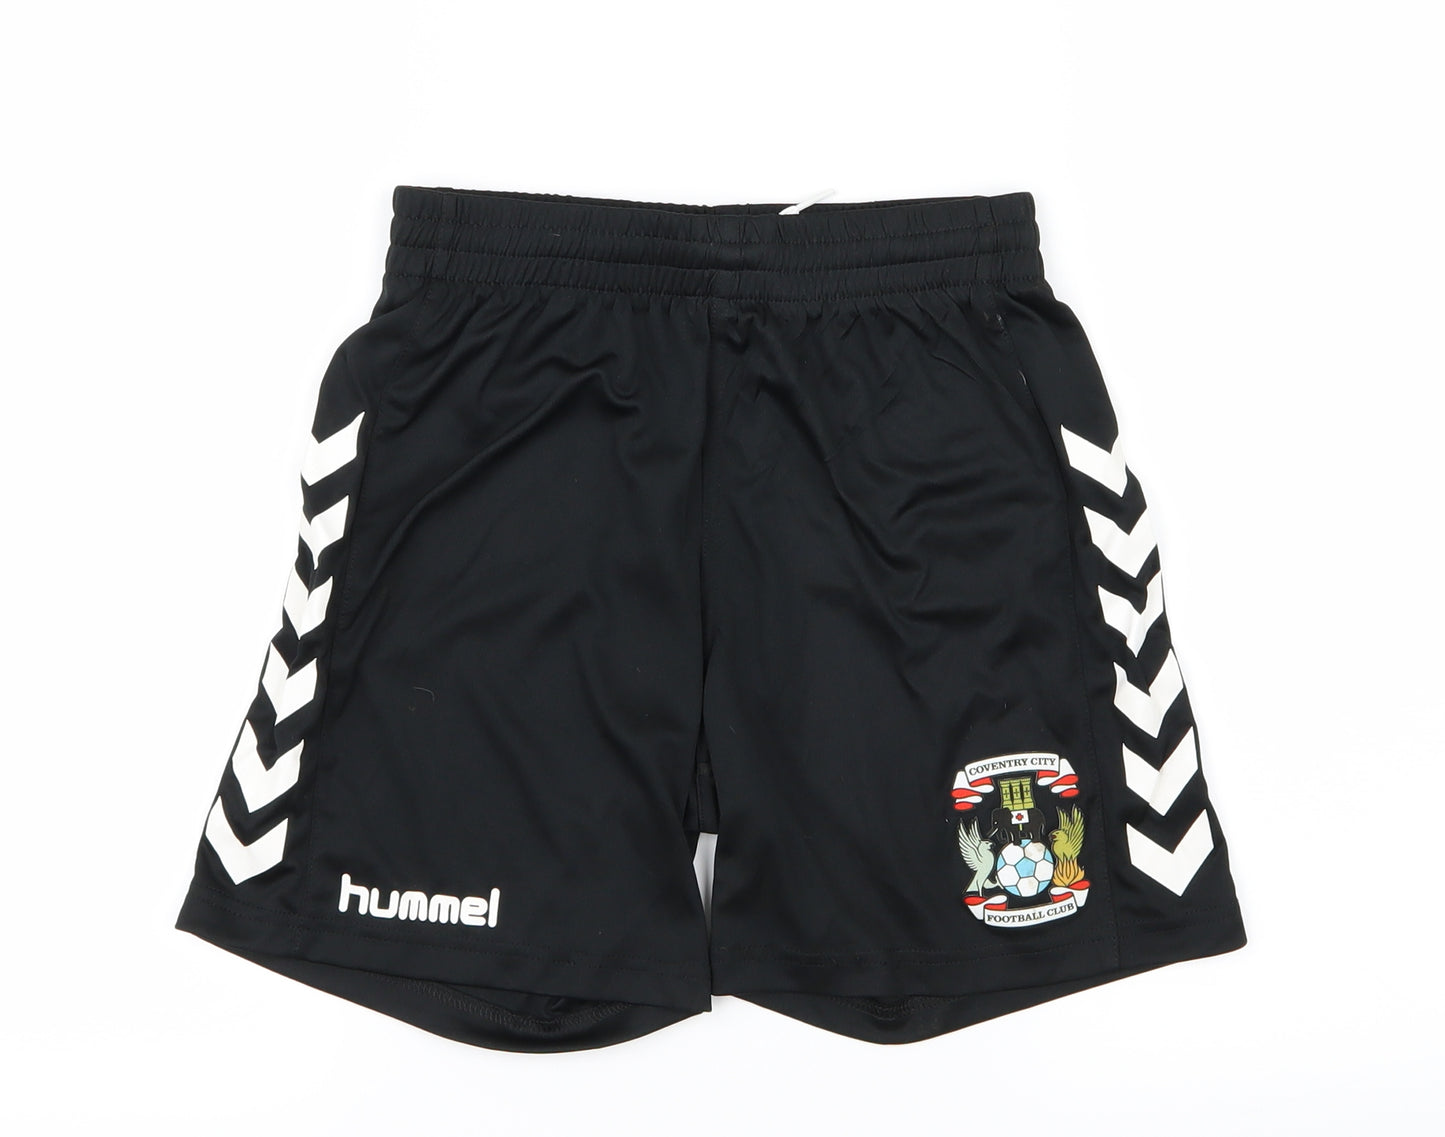 Hummel Boys Black   Bermuda Shorts Size 10-11 Years - Coventry City FC